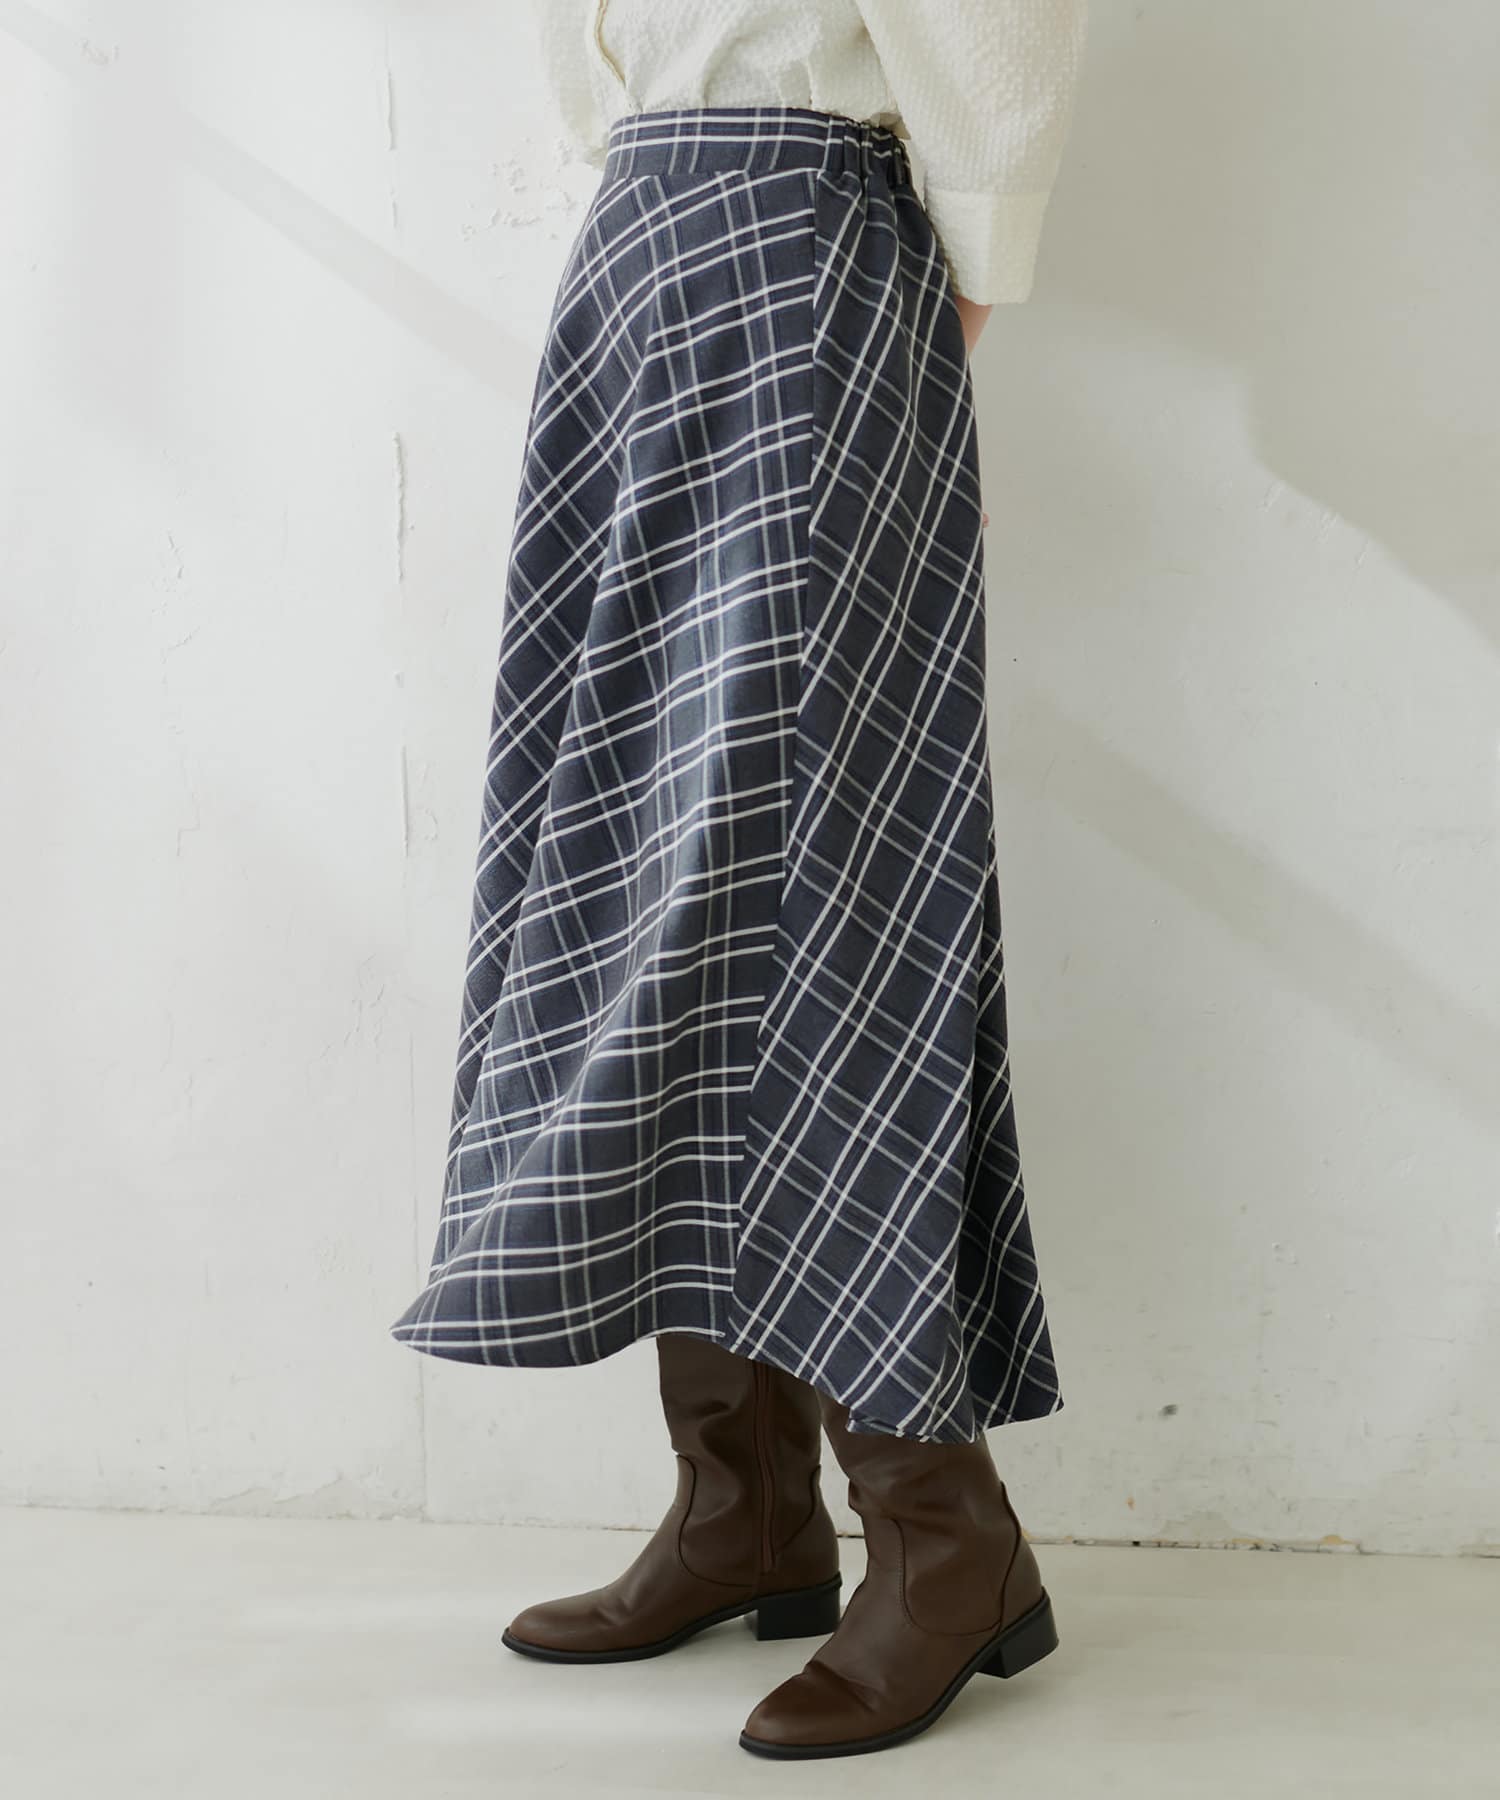 natural couture(ナチュラルクチュール) 【WEB限定カラー有り】チェック柄フレアスカート